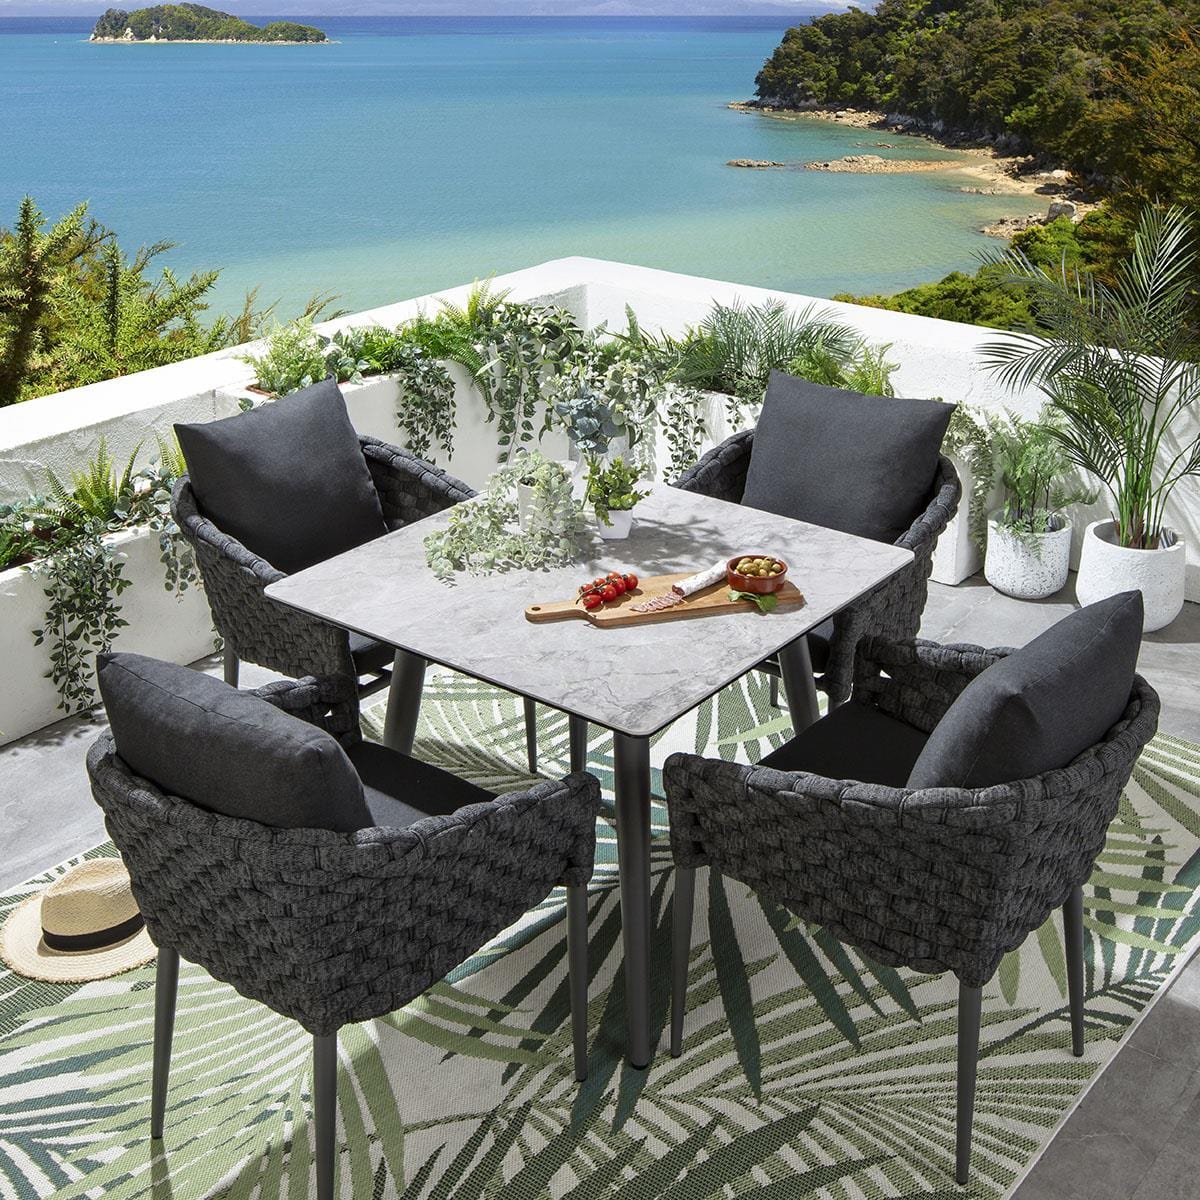 Quatropi Sundowner 4 Seater Square Ceramic Garden Dining Set Charcoal & Grey